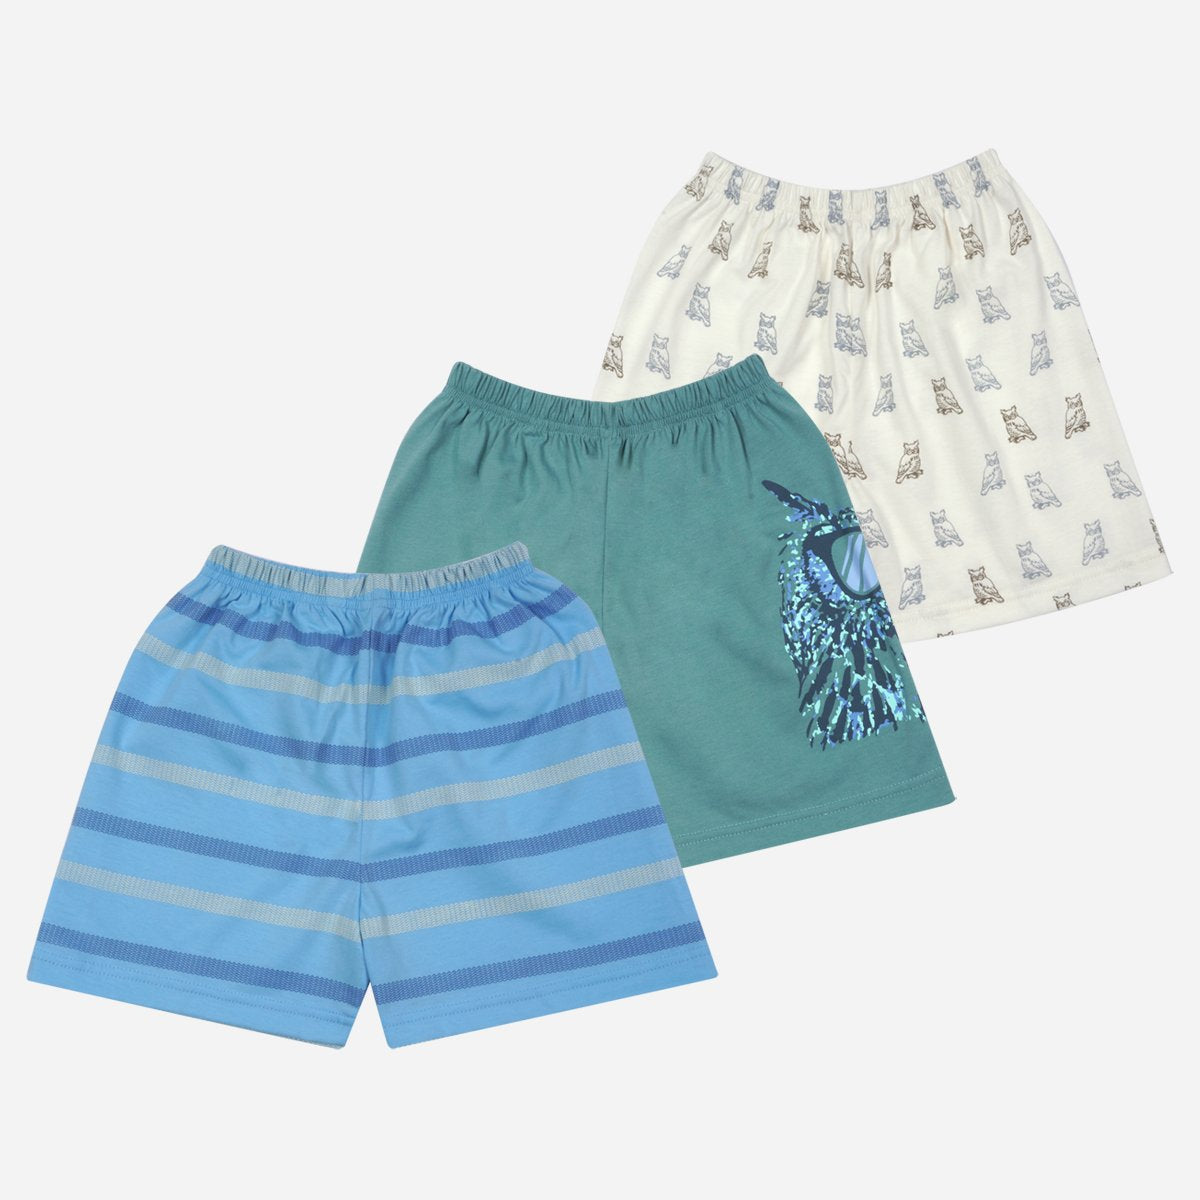 Sm Basics Boys' 3 Pc Printed Shorts Set